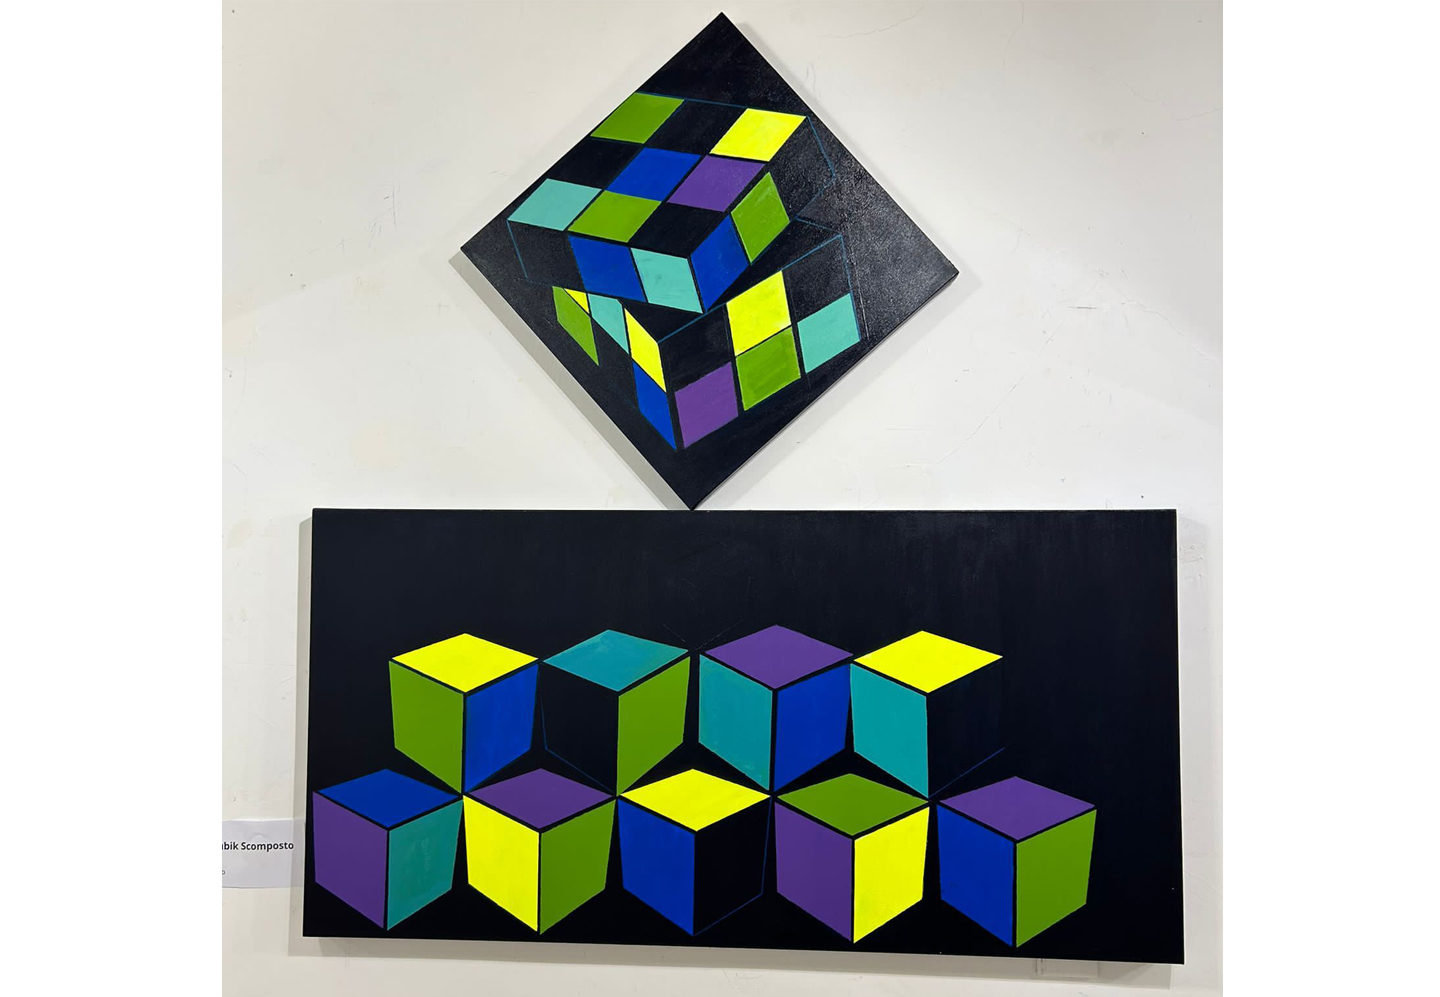 Cubo scomposto di Rubik